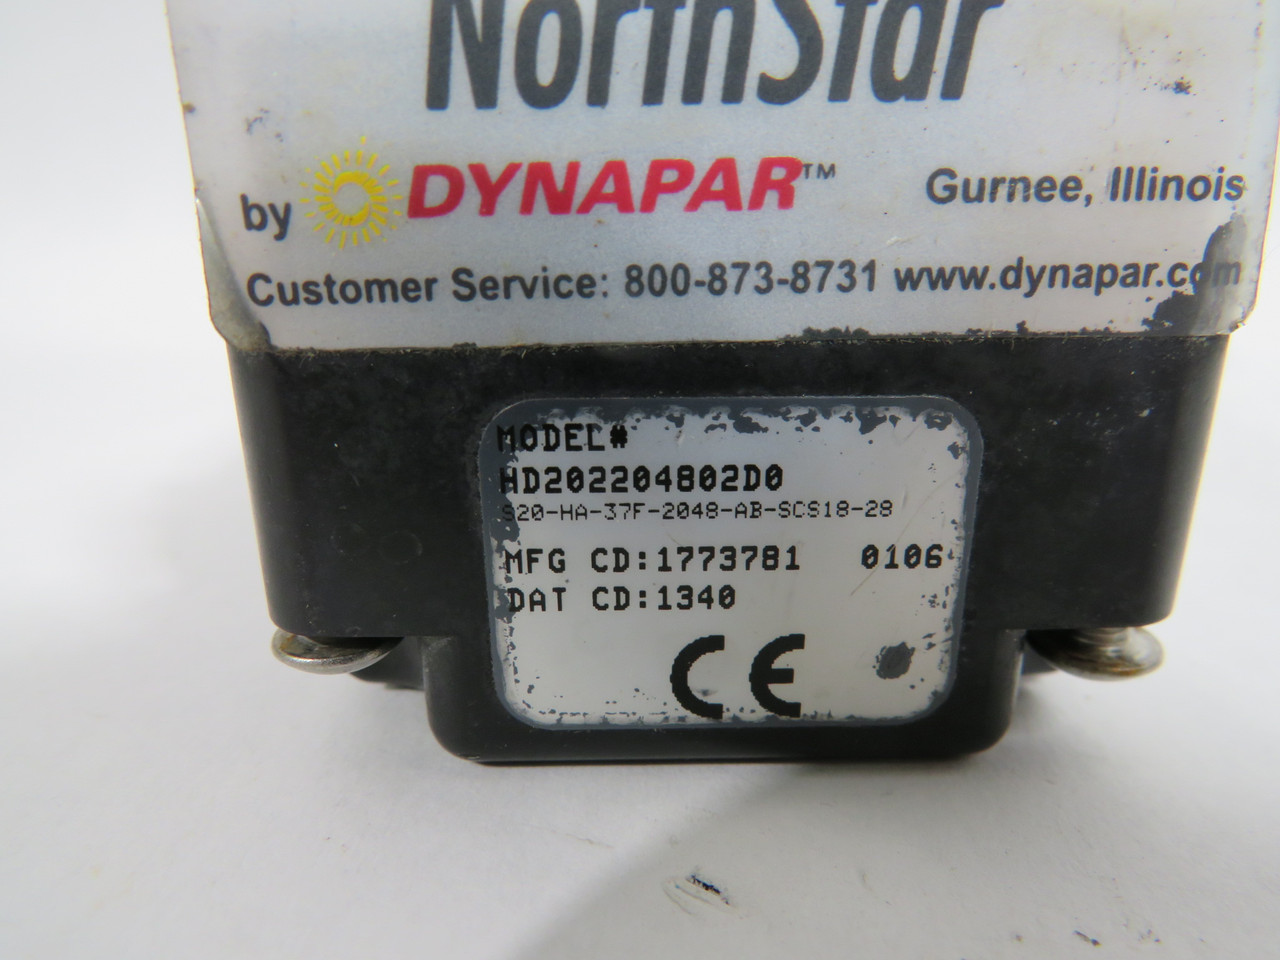 NorthStar S20-HA-37F-2048-AB-SCS18-28 HD202204802D0 Encoder USED